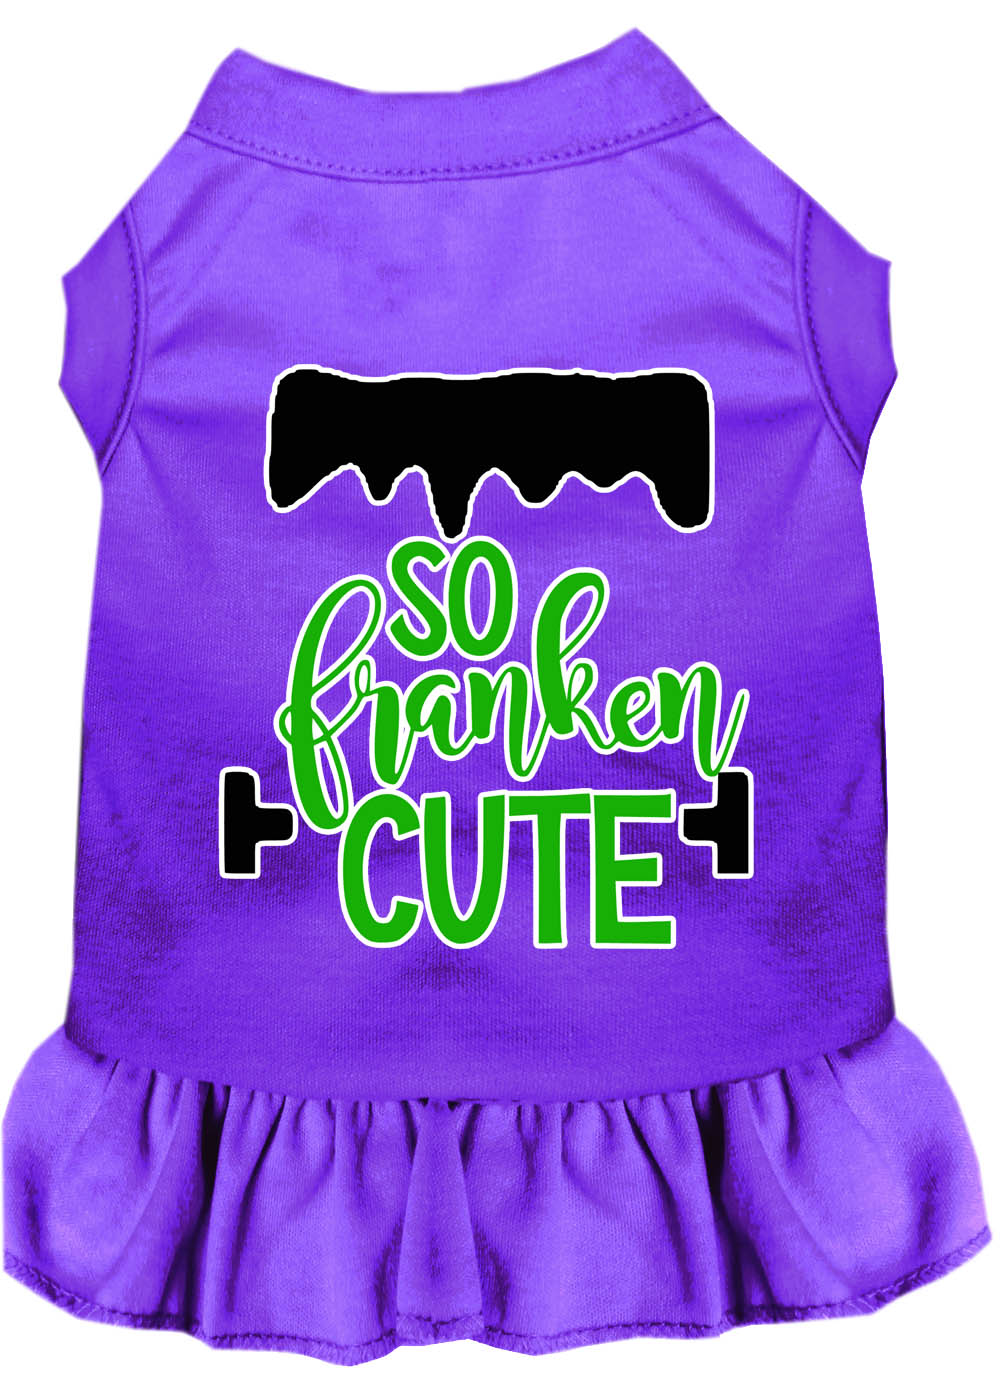 So Franken Cute Screen Print Dog Dress Purple XL